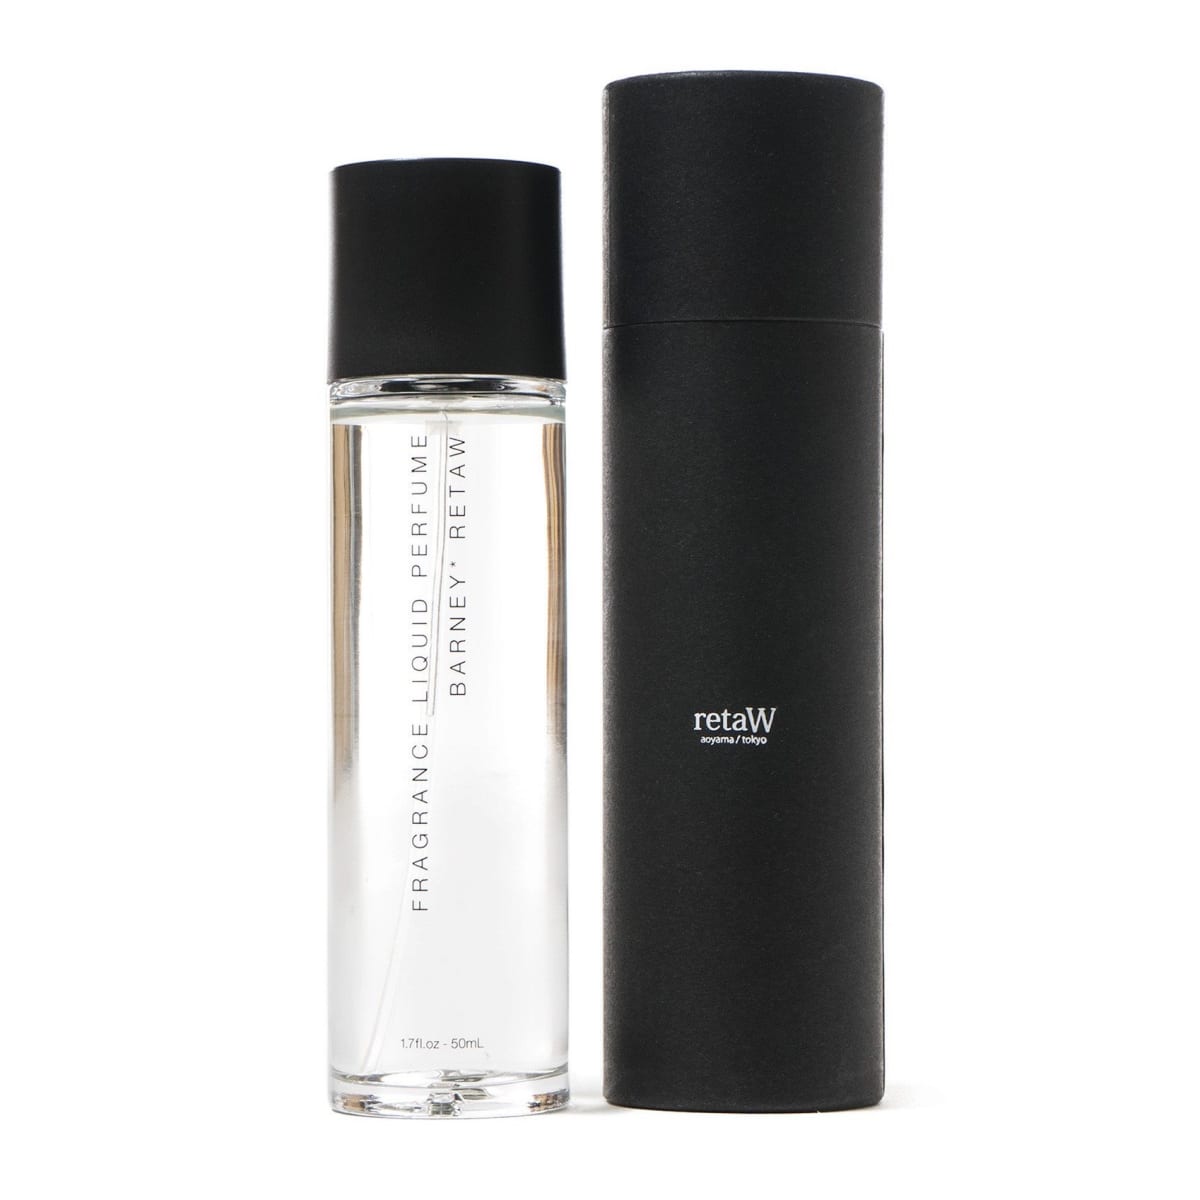 Cult fragrance brand retaW finally introduces a range of perfumes 